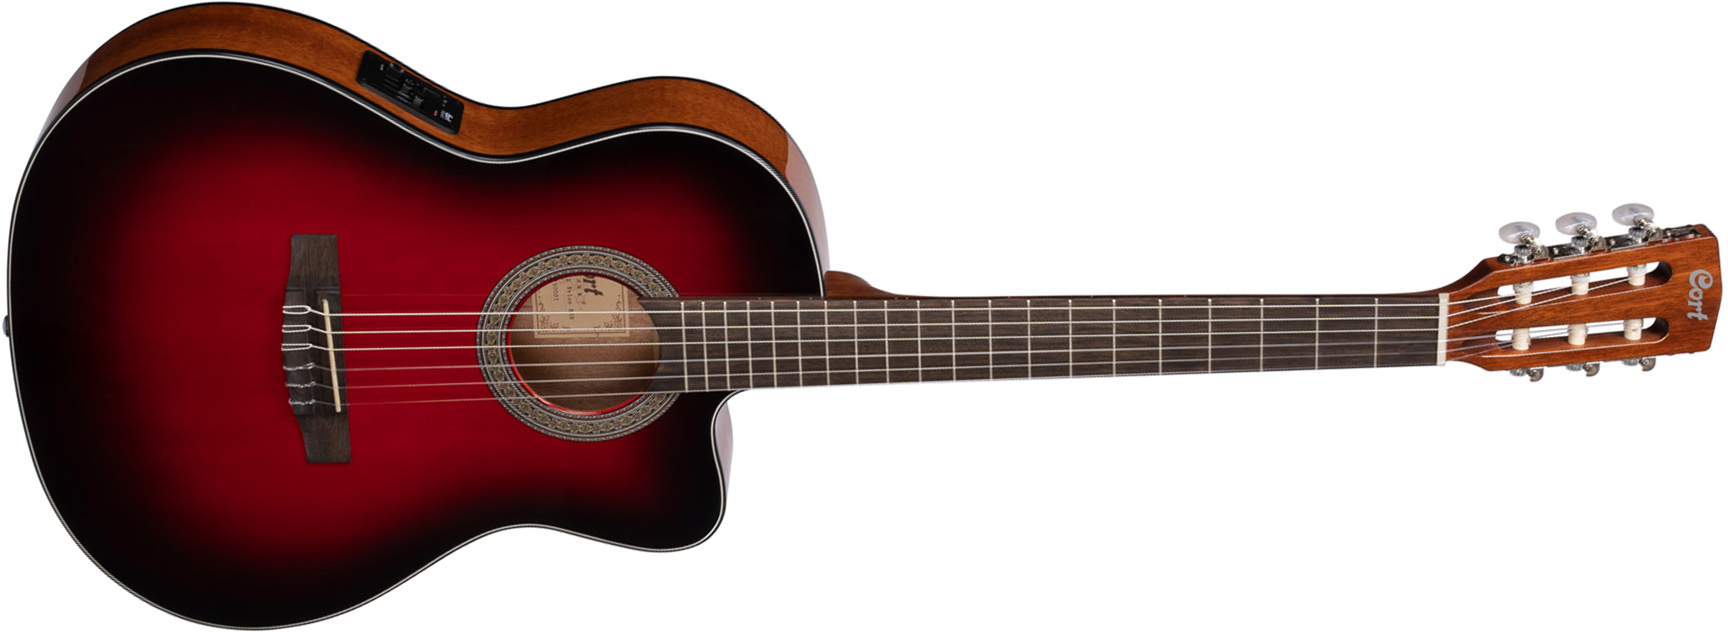 Cort Jade E Nylon Cw Epicea Acajou Lau - Burgundy Red Burst - Classical guitar 4/4 size - Main picture